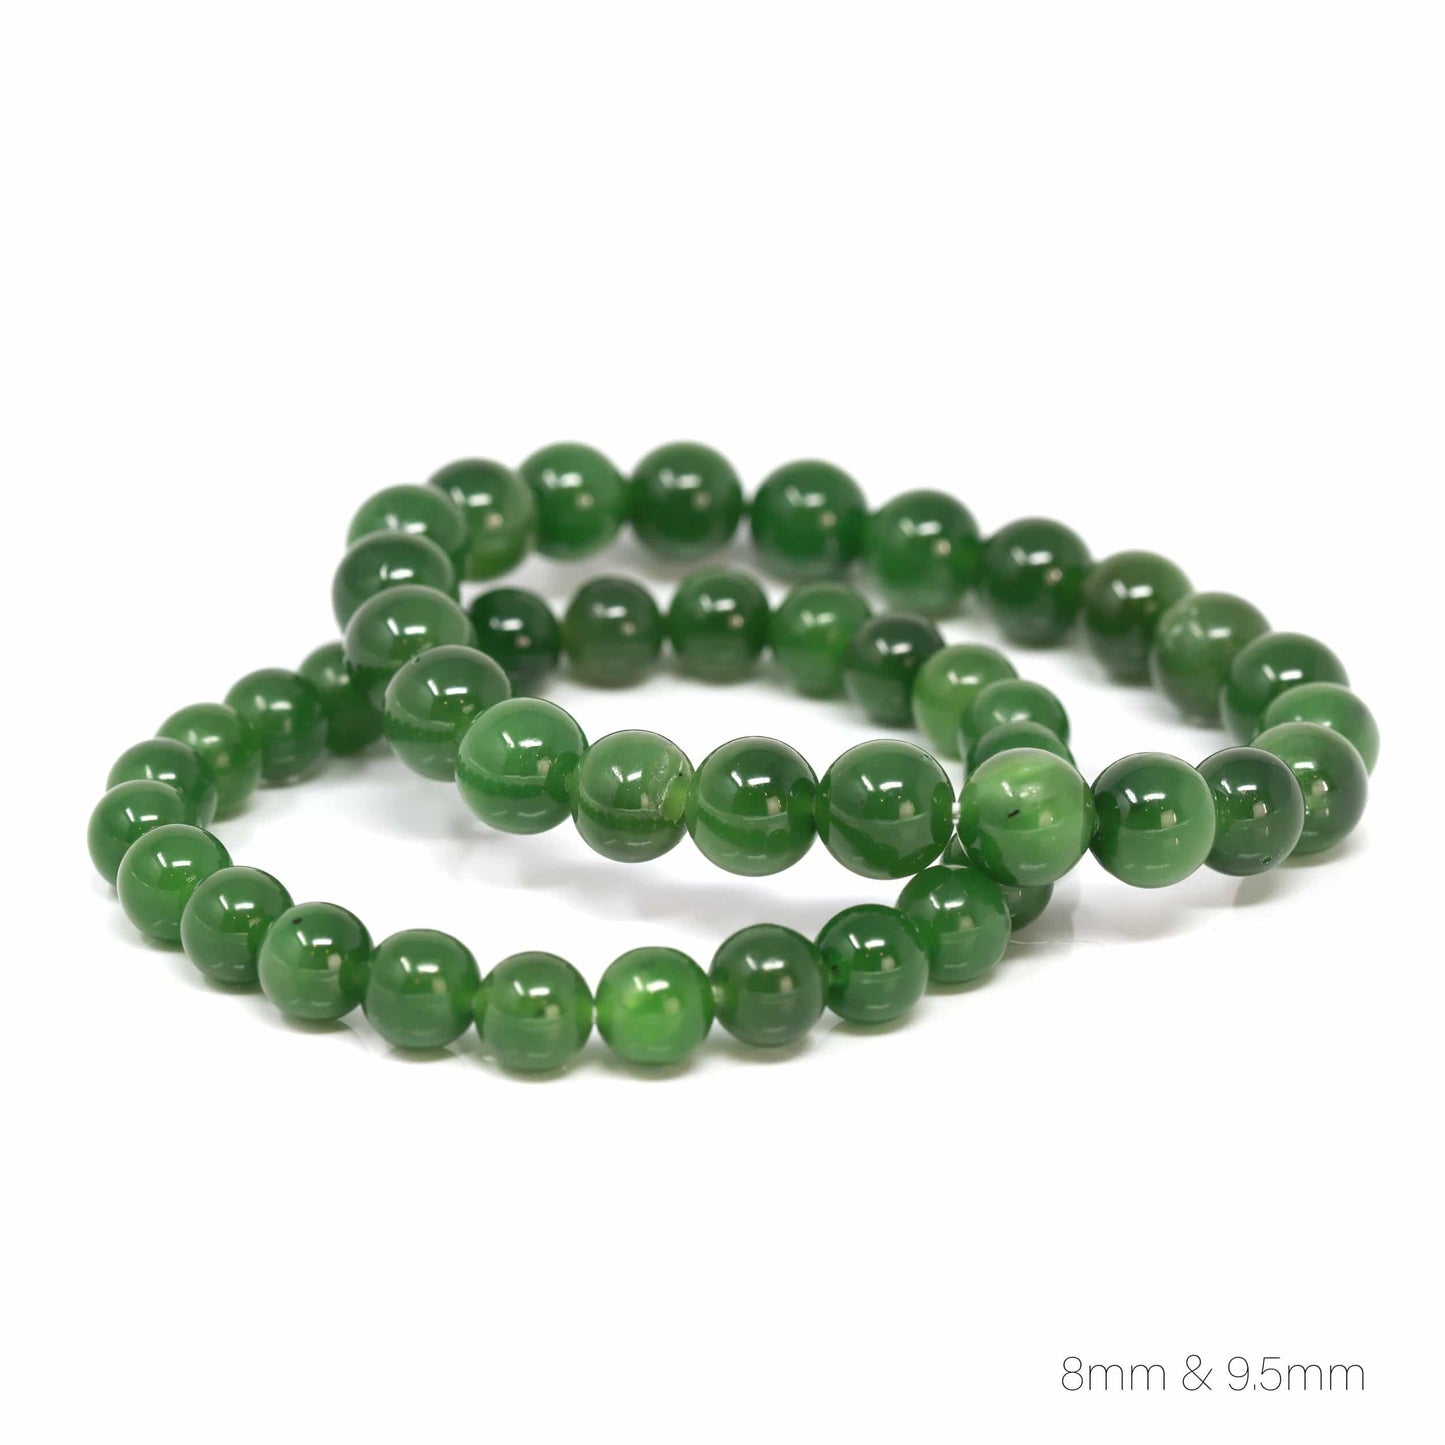 Sold at Auction: Chinese Green Jade Bangle,